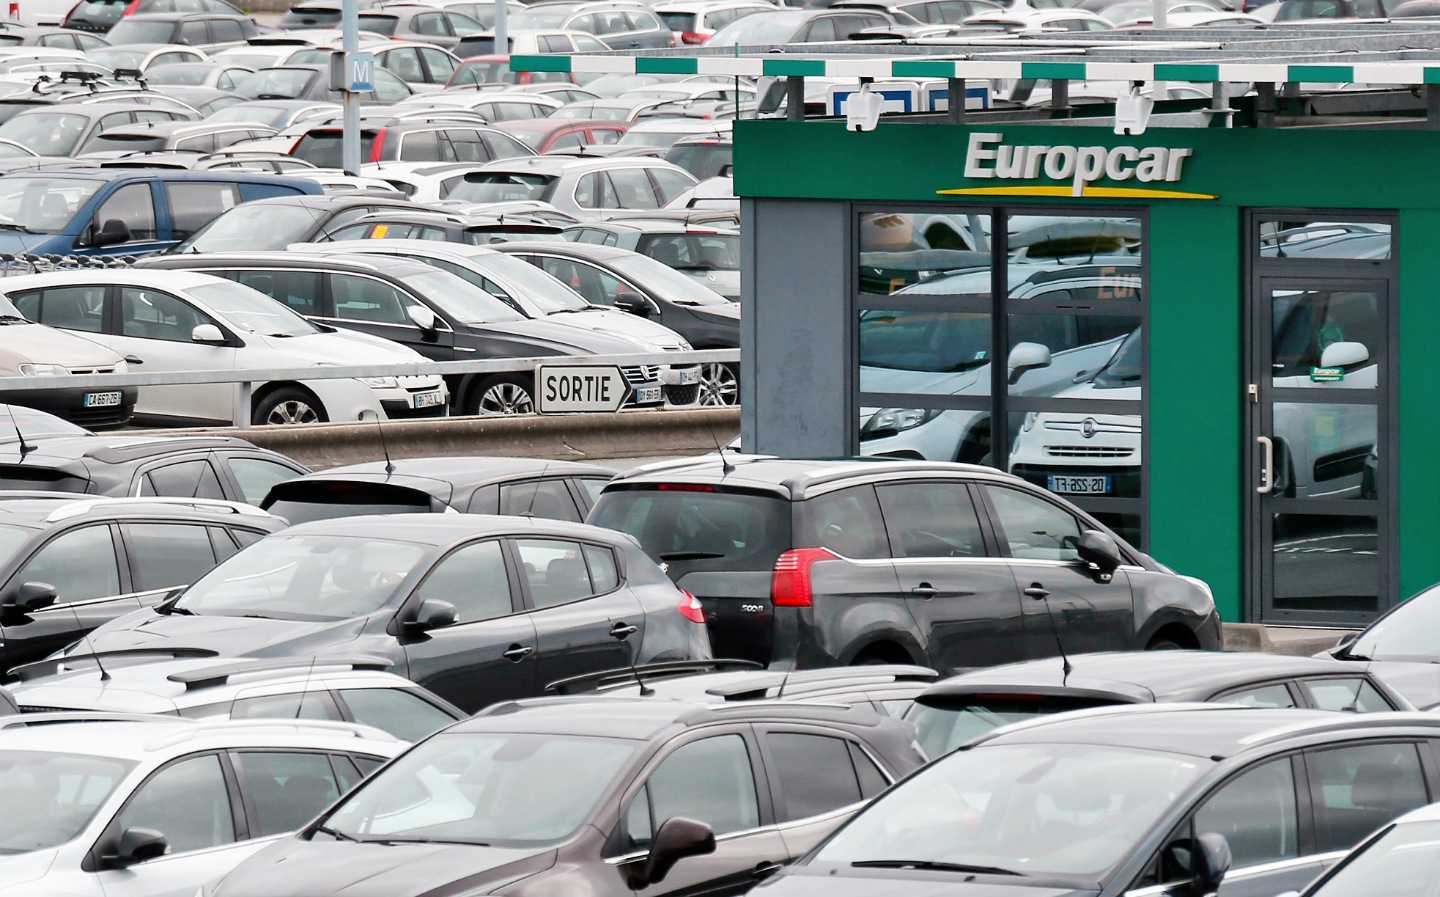 Beware of ‘extortionate’ repair bills for holiday hire cars